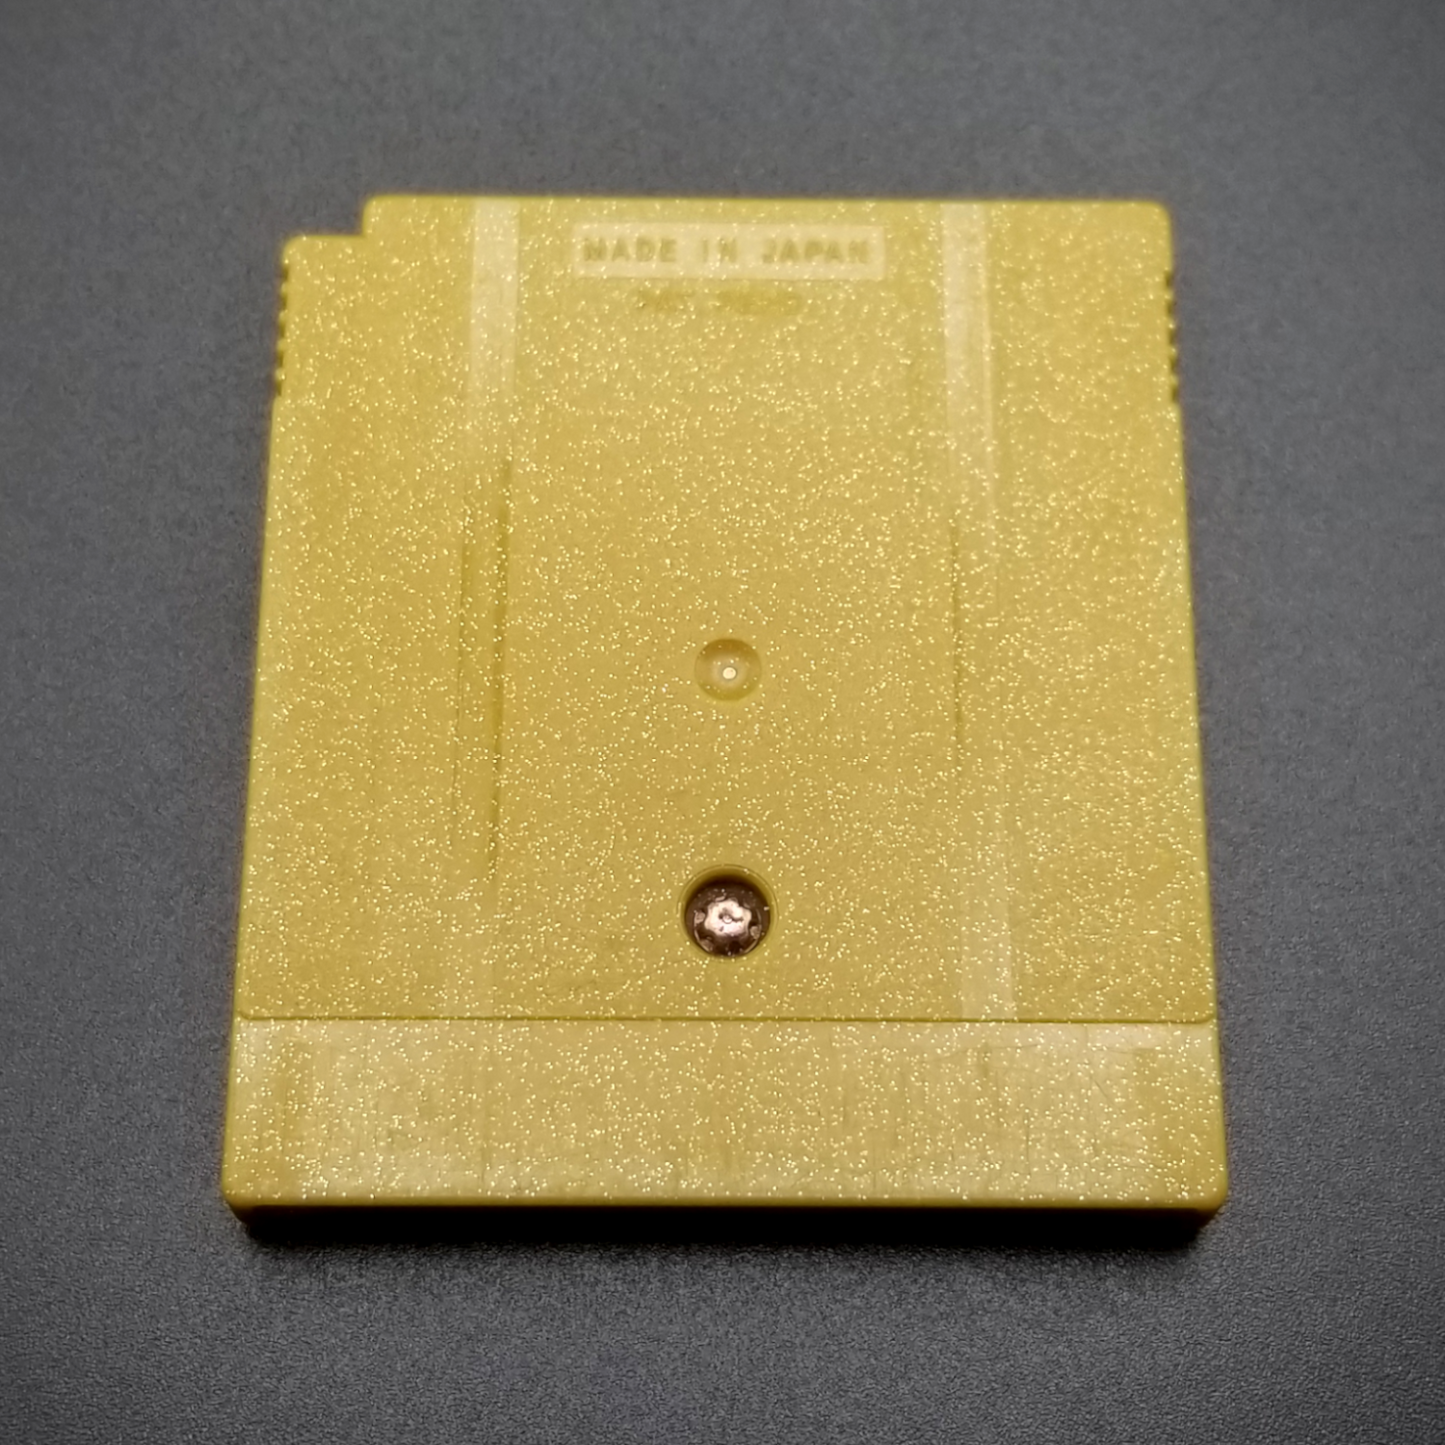 OUTLET - "Pokemon Gold Version" Gameboy Color game cartridge